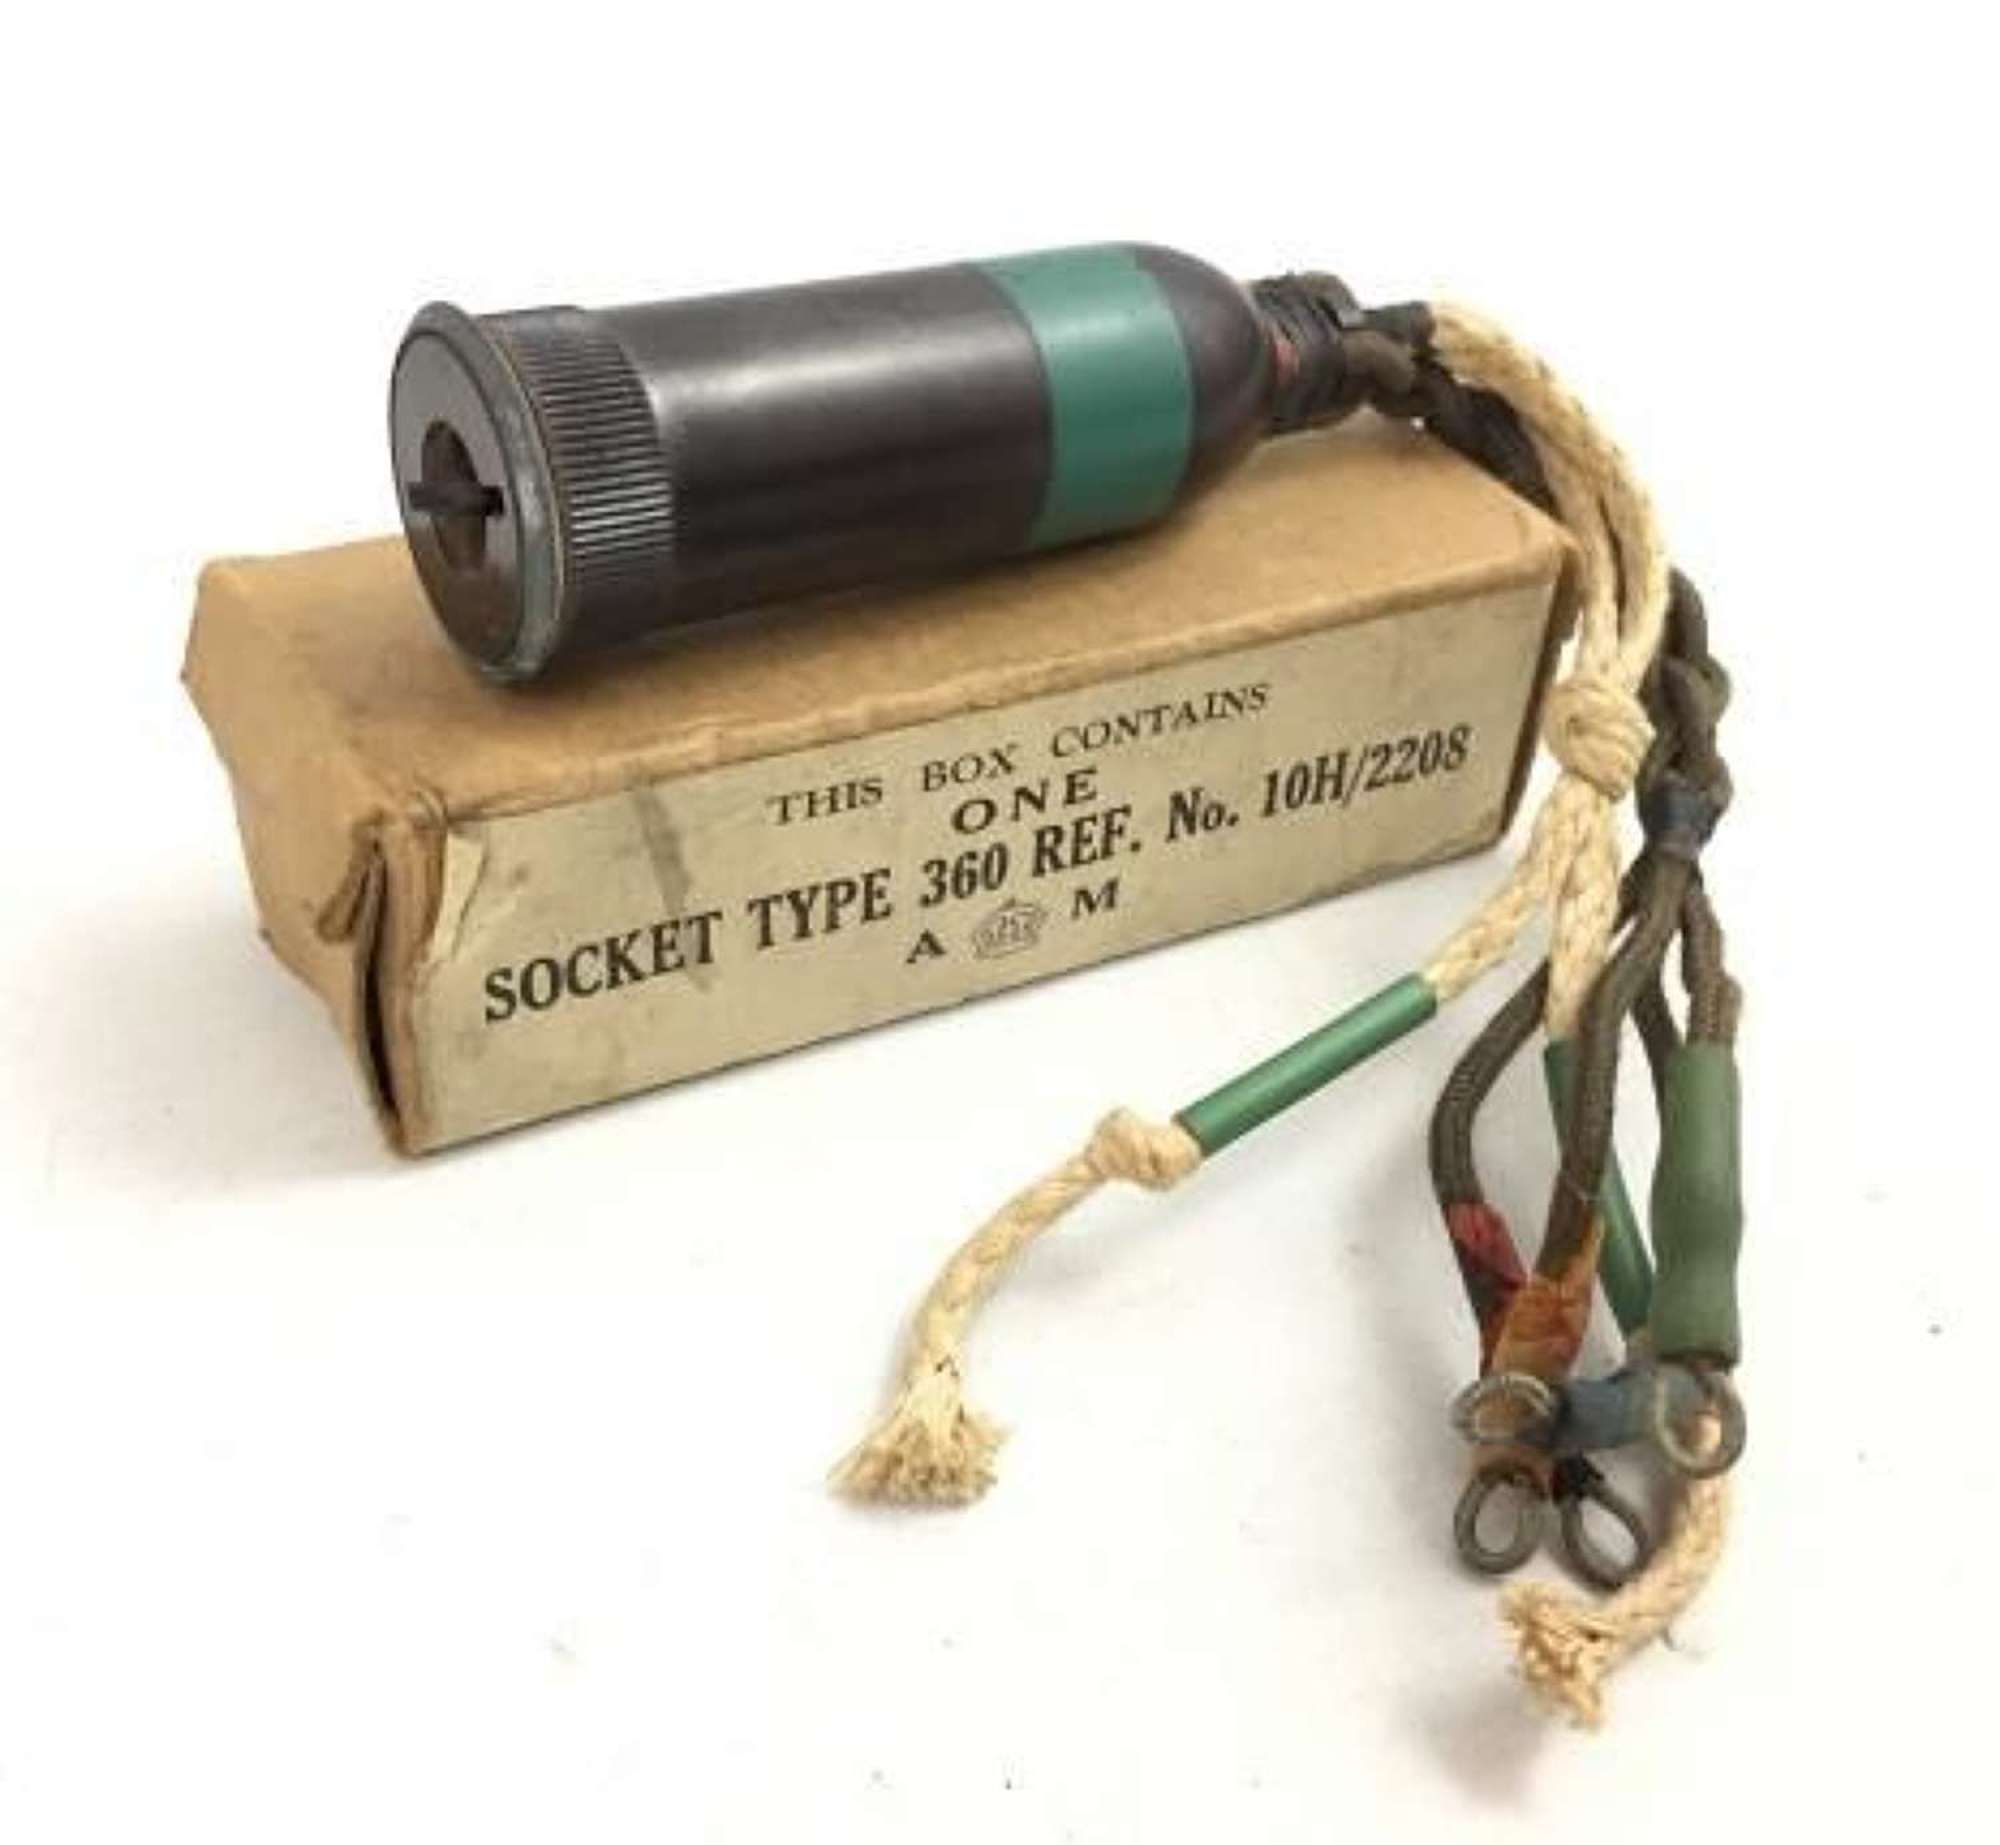 Original RAF Socket Type 360